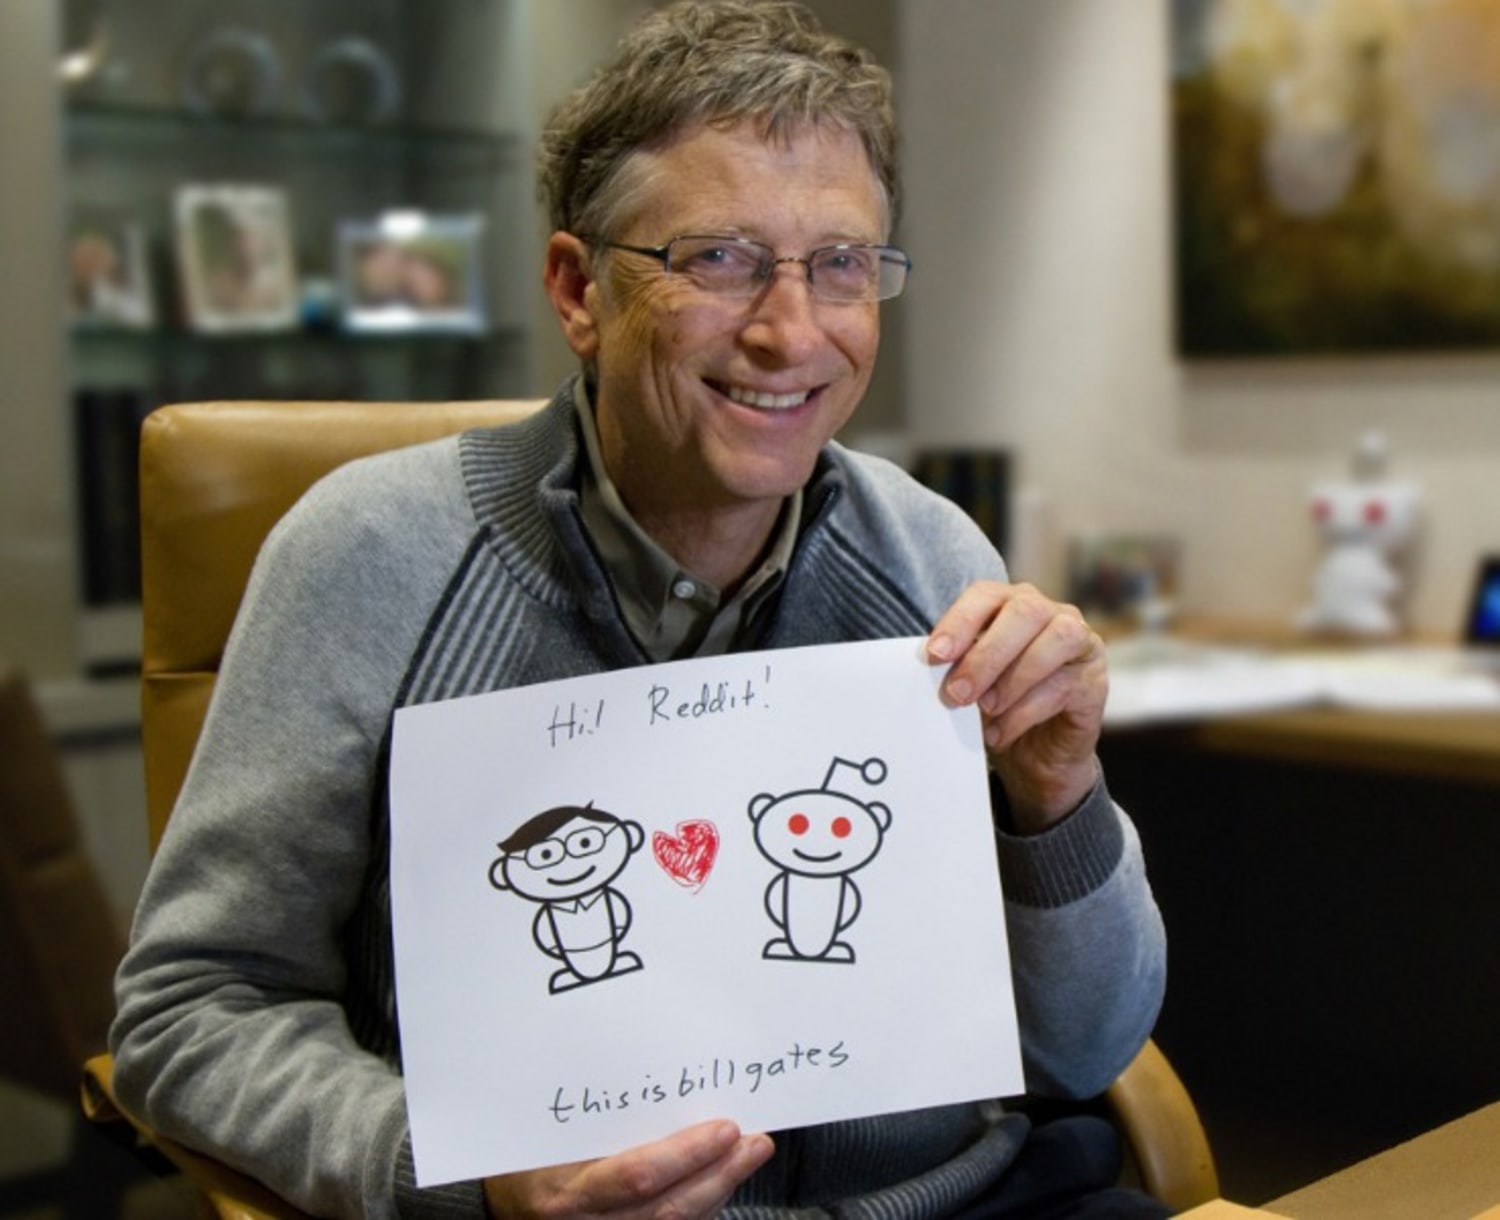 Bill Gates riffs on health, tech, and Steve Jobs in Reddit chat